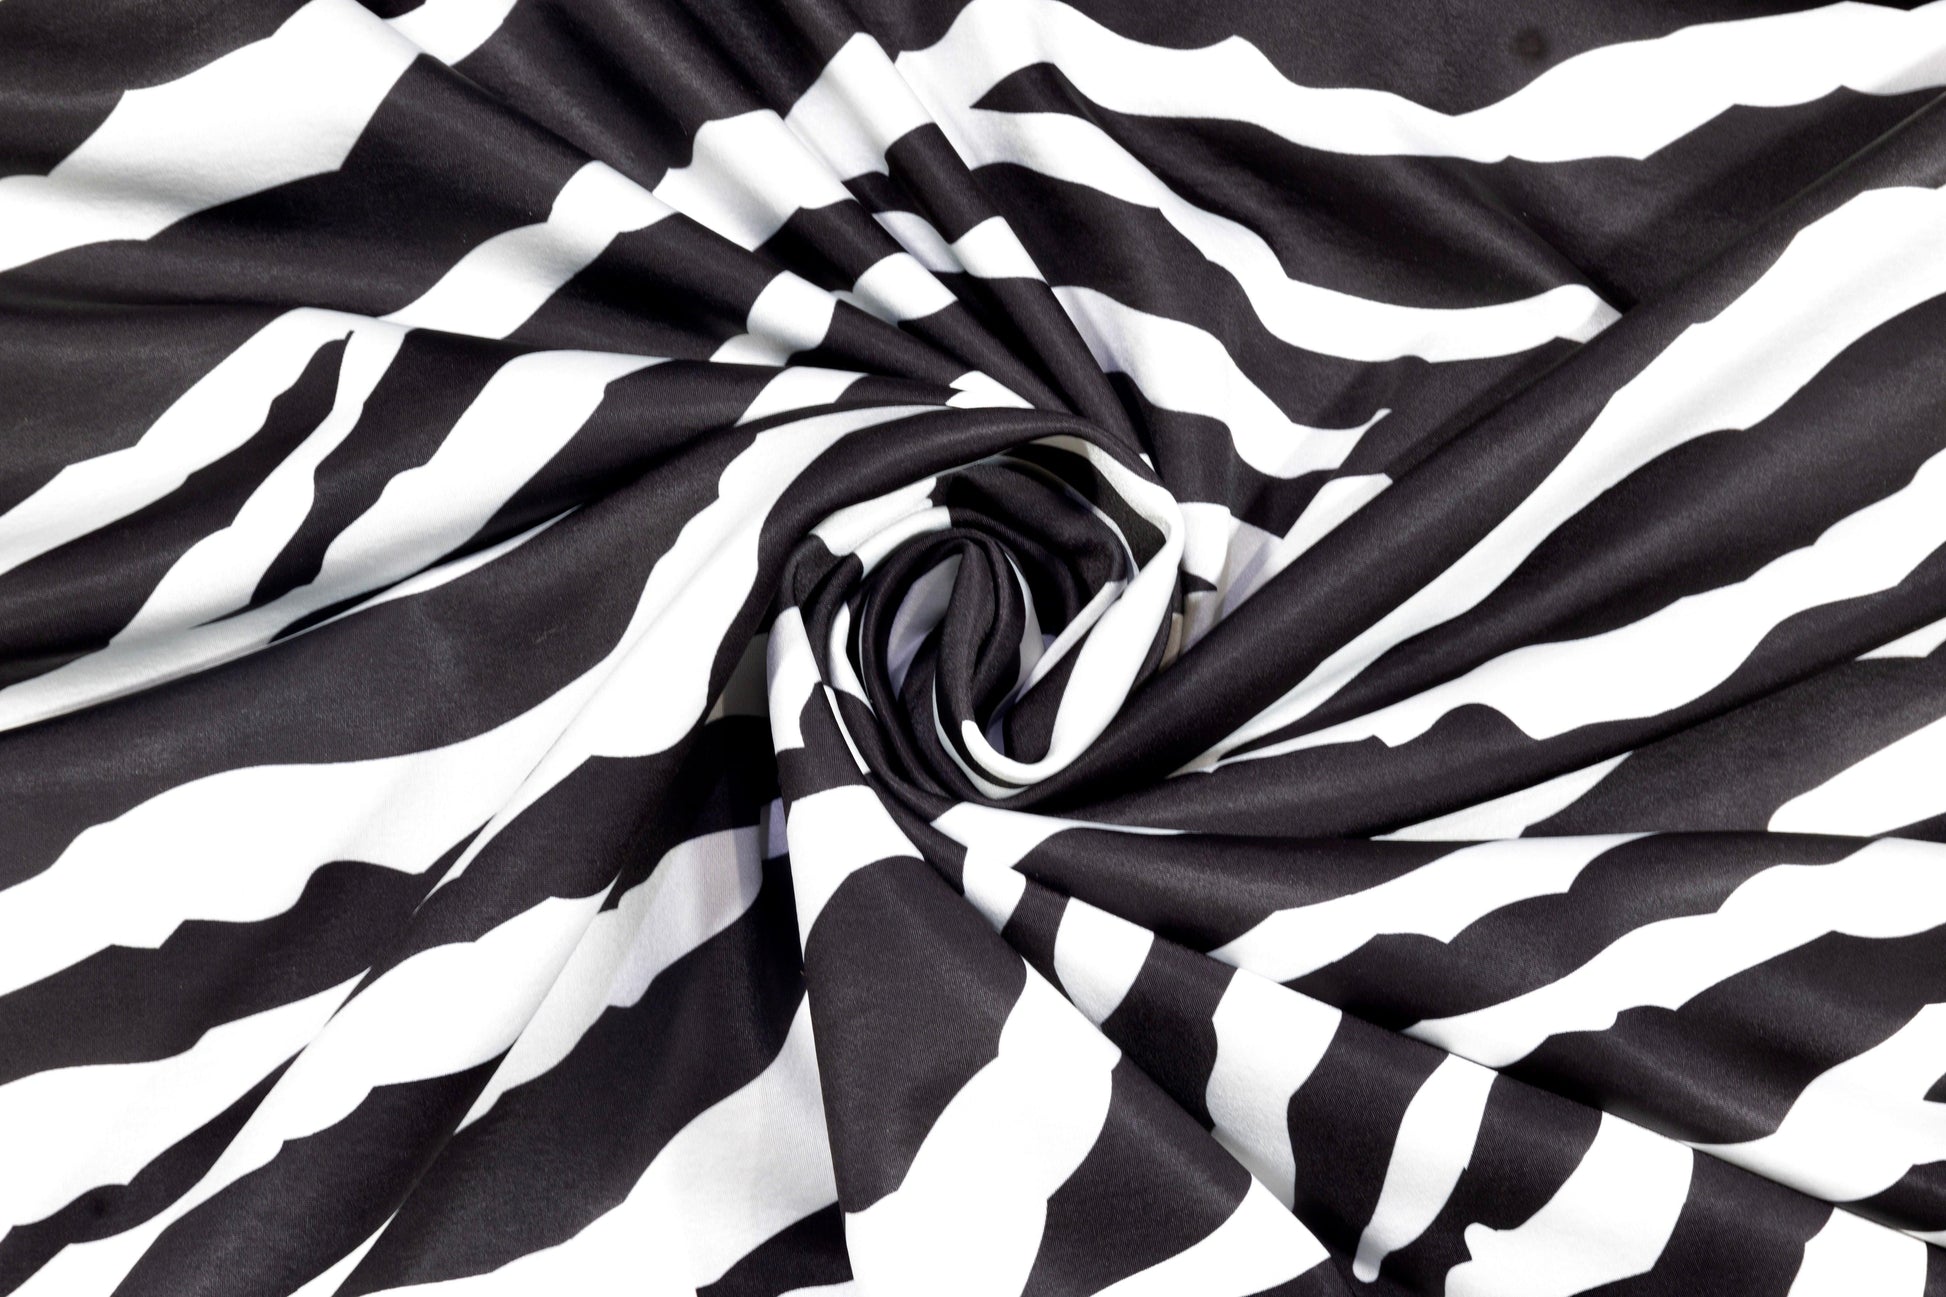 Black and White Zebra Italian Stretch Scuba - Prime Fabrics